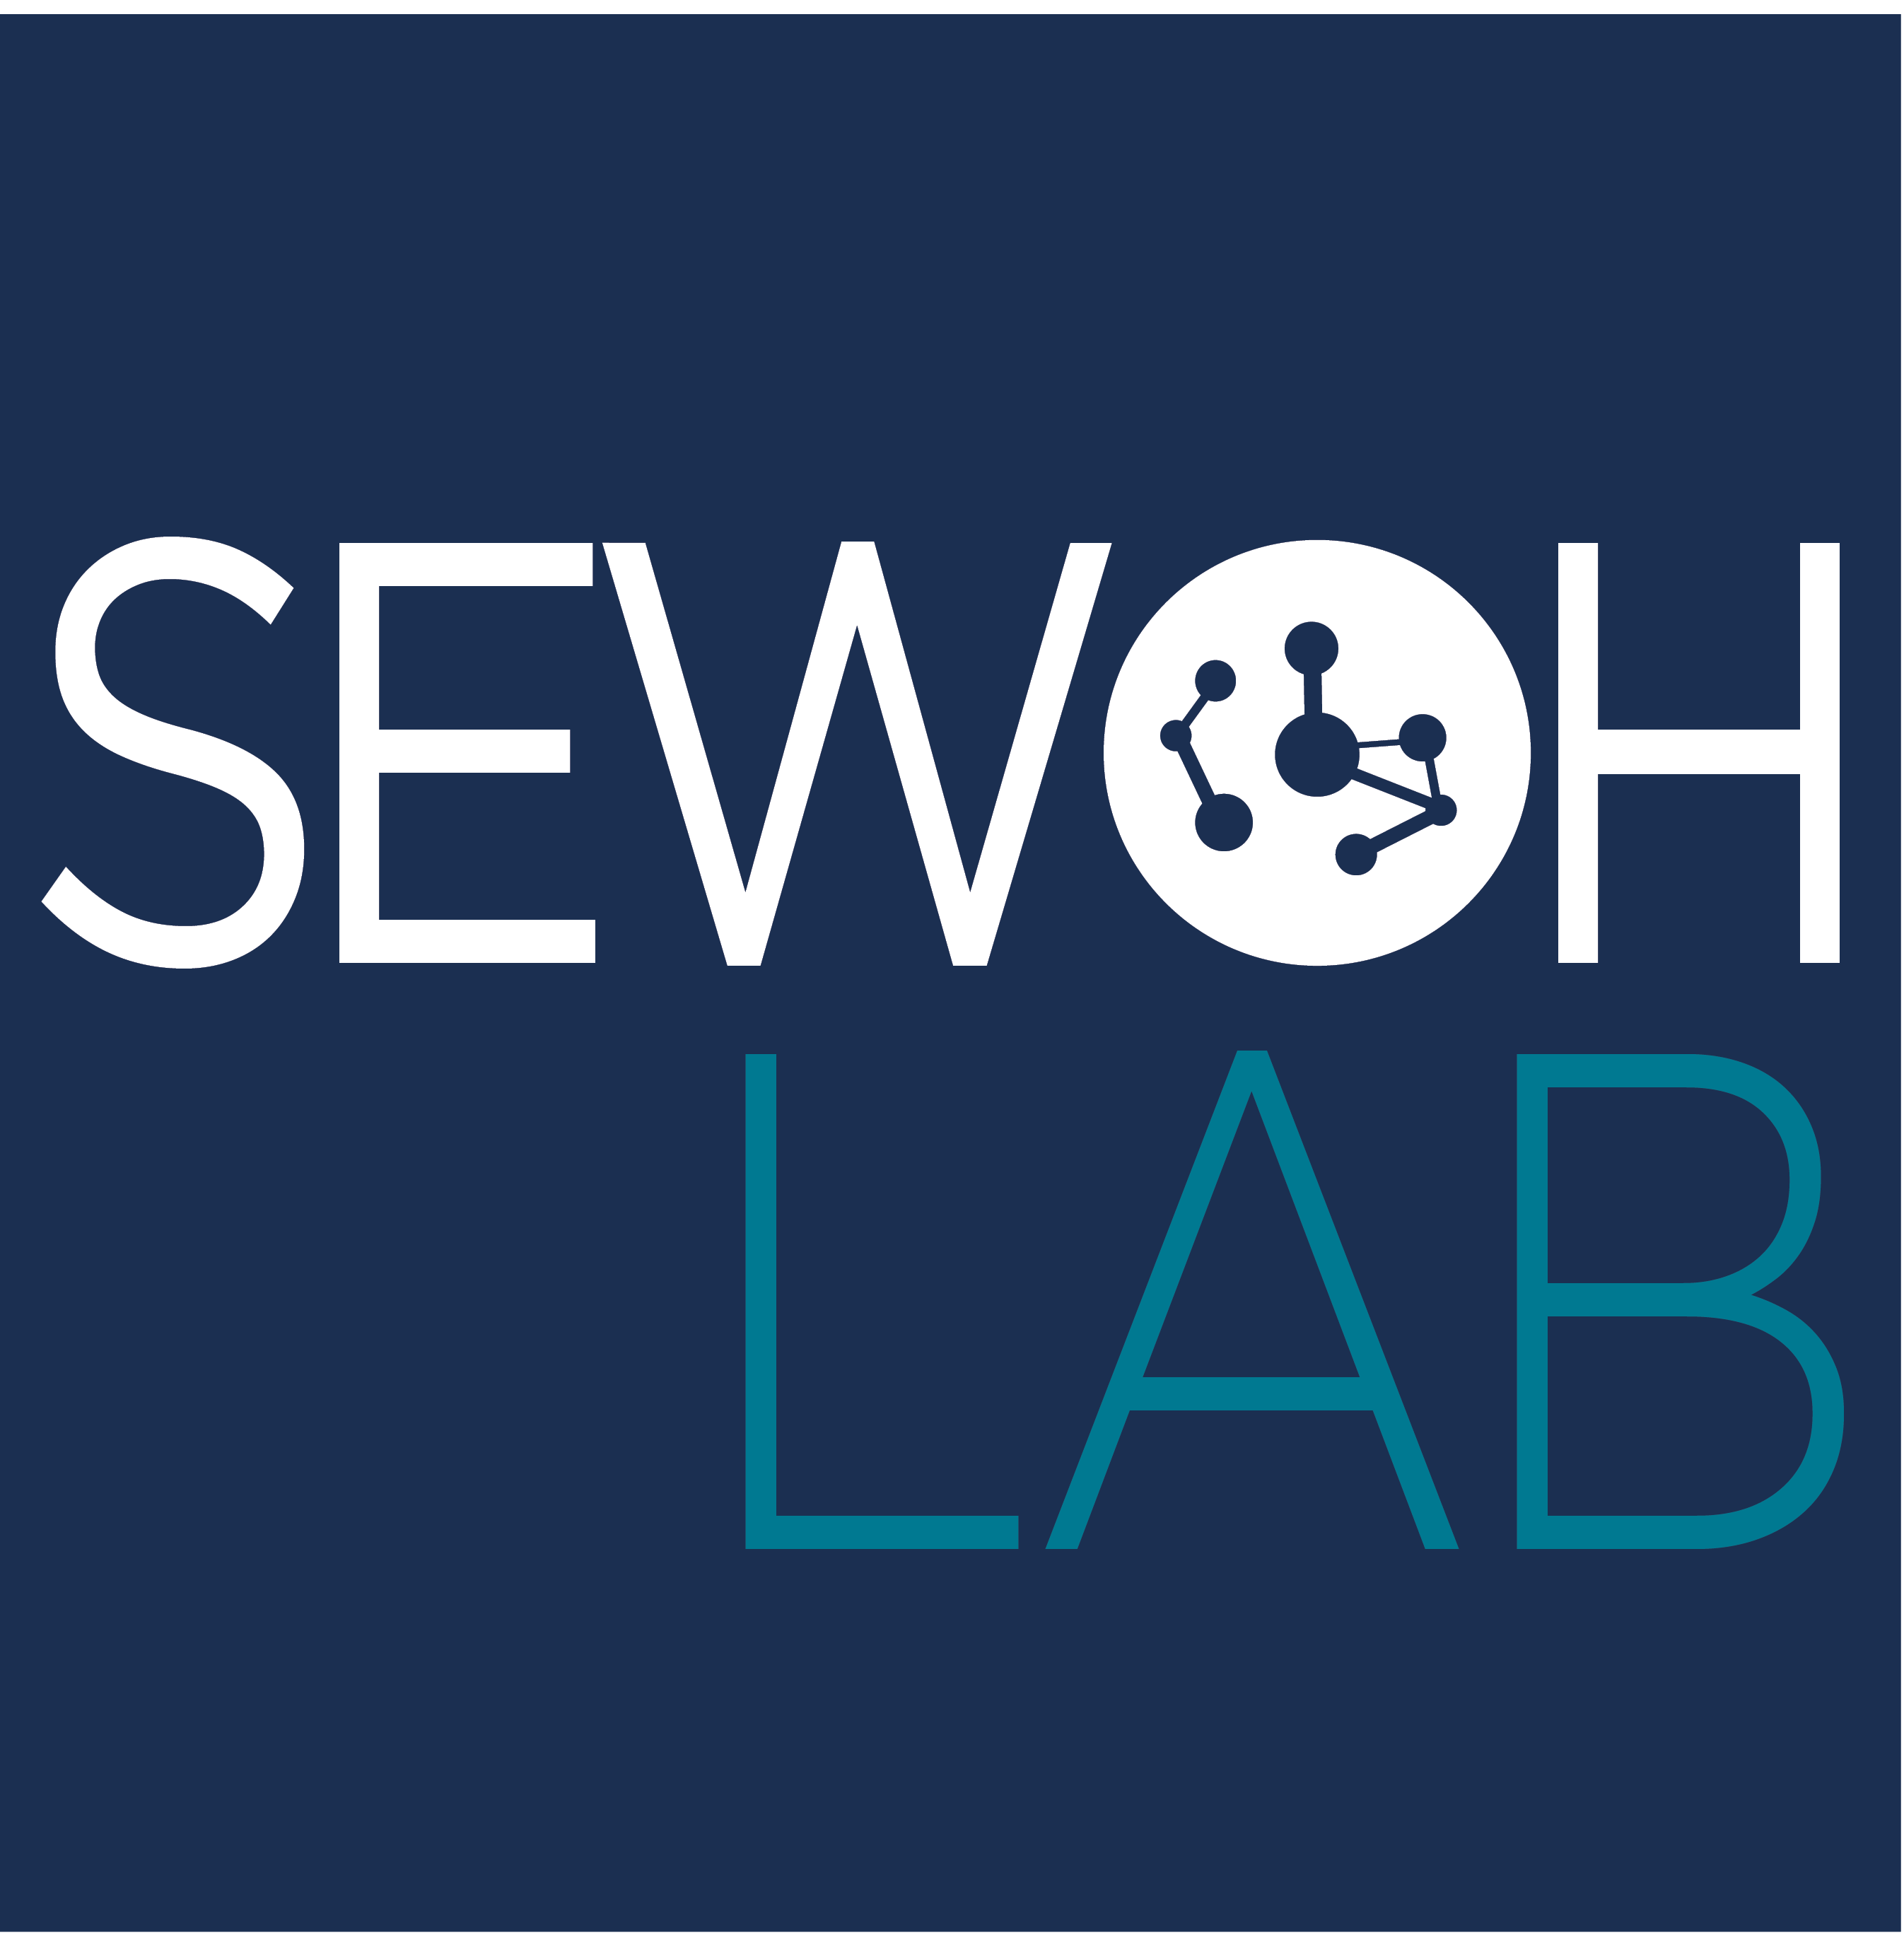 SEWOH Lab